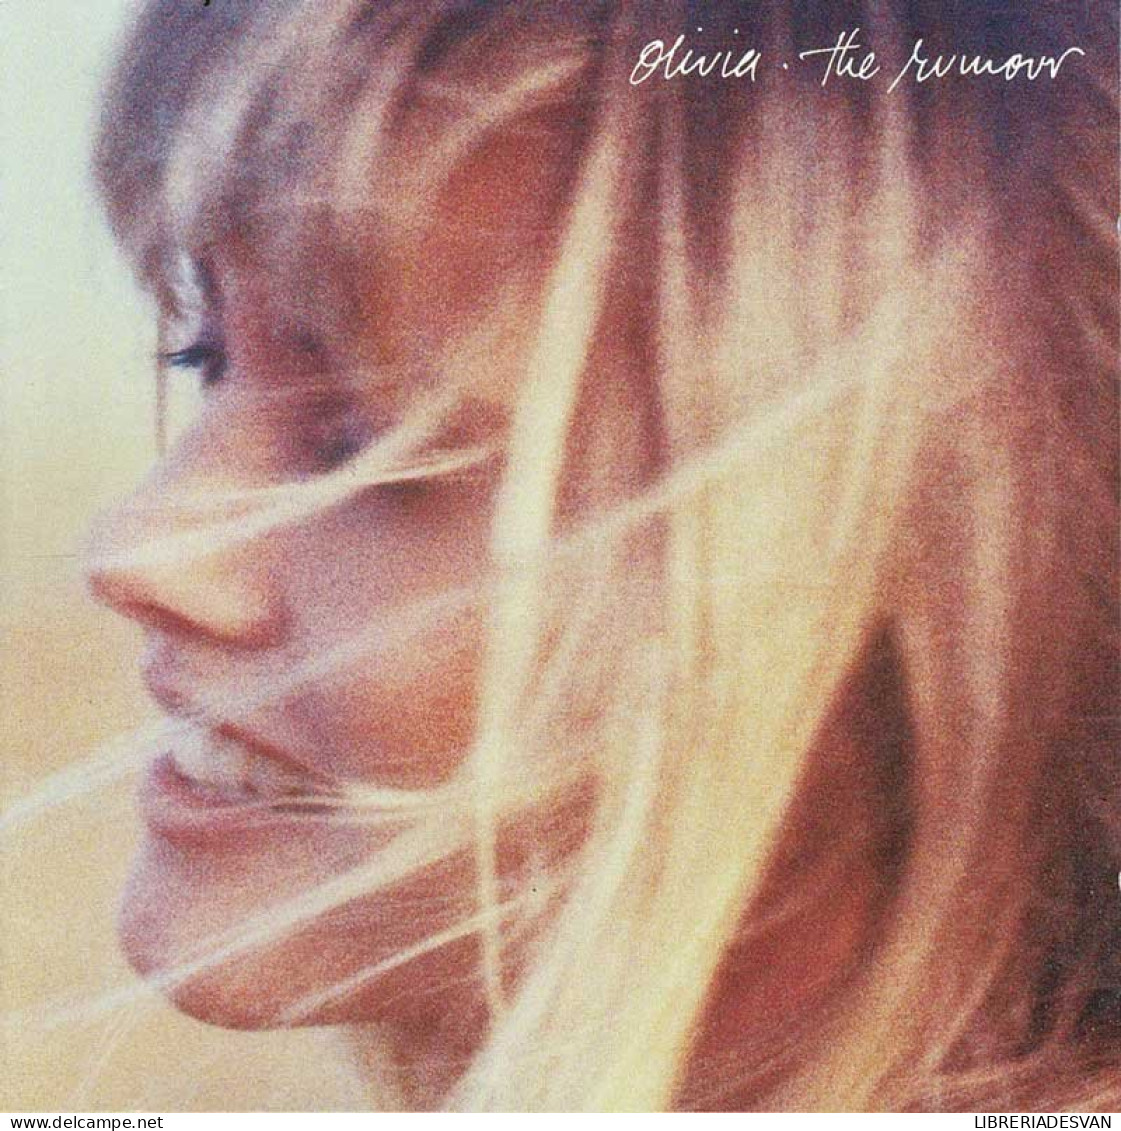 Olivia Newton-John - The Rumour. CD - Disco, Pop